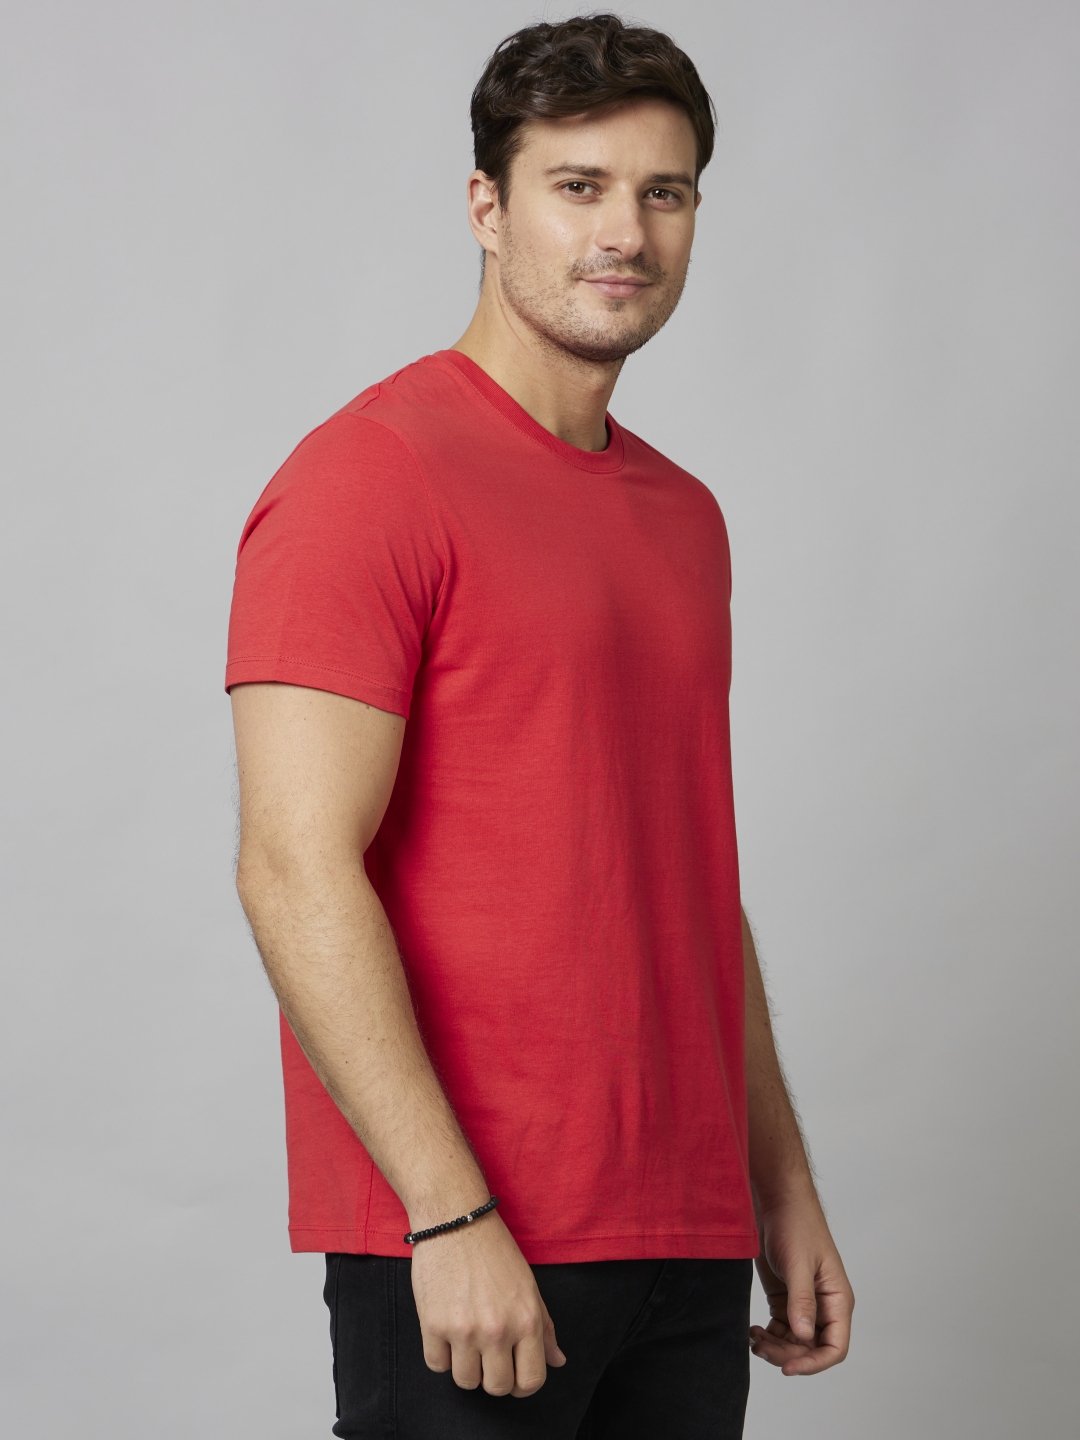 Men's Red Solid Regular T-Shirts